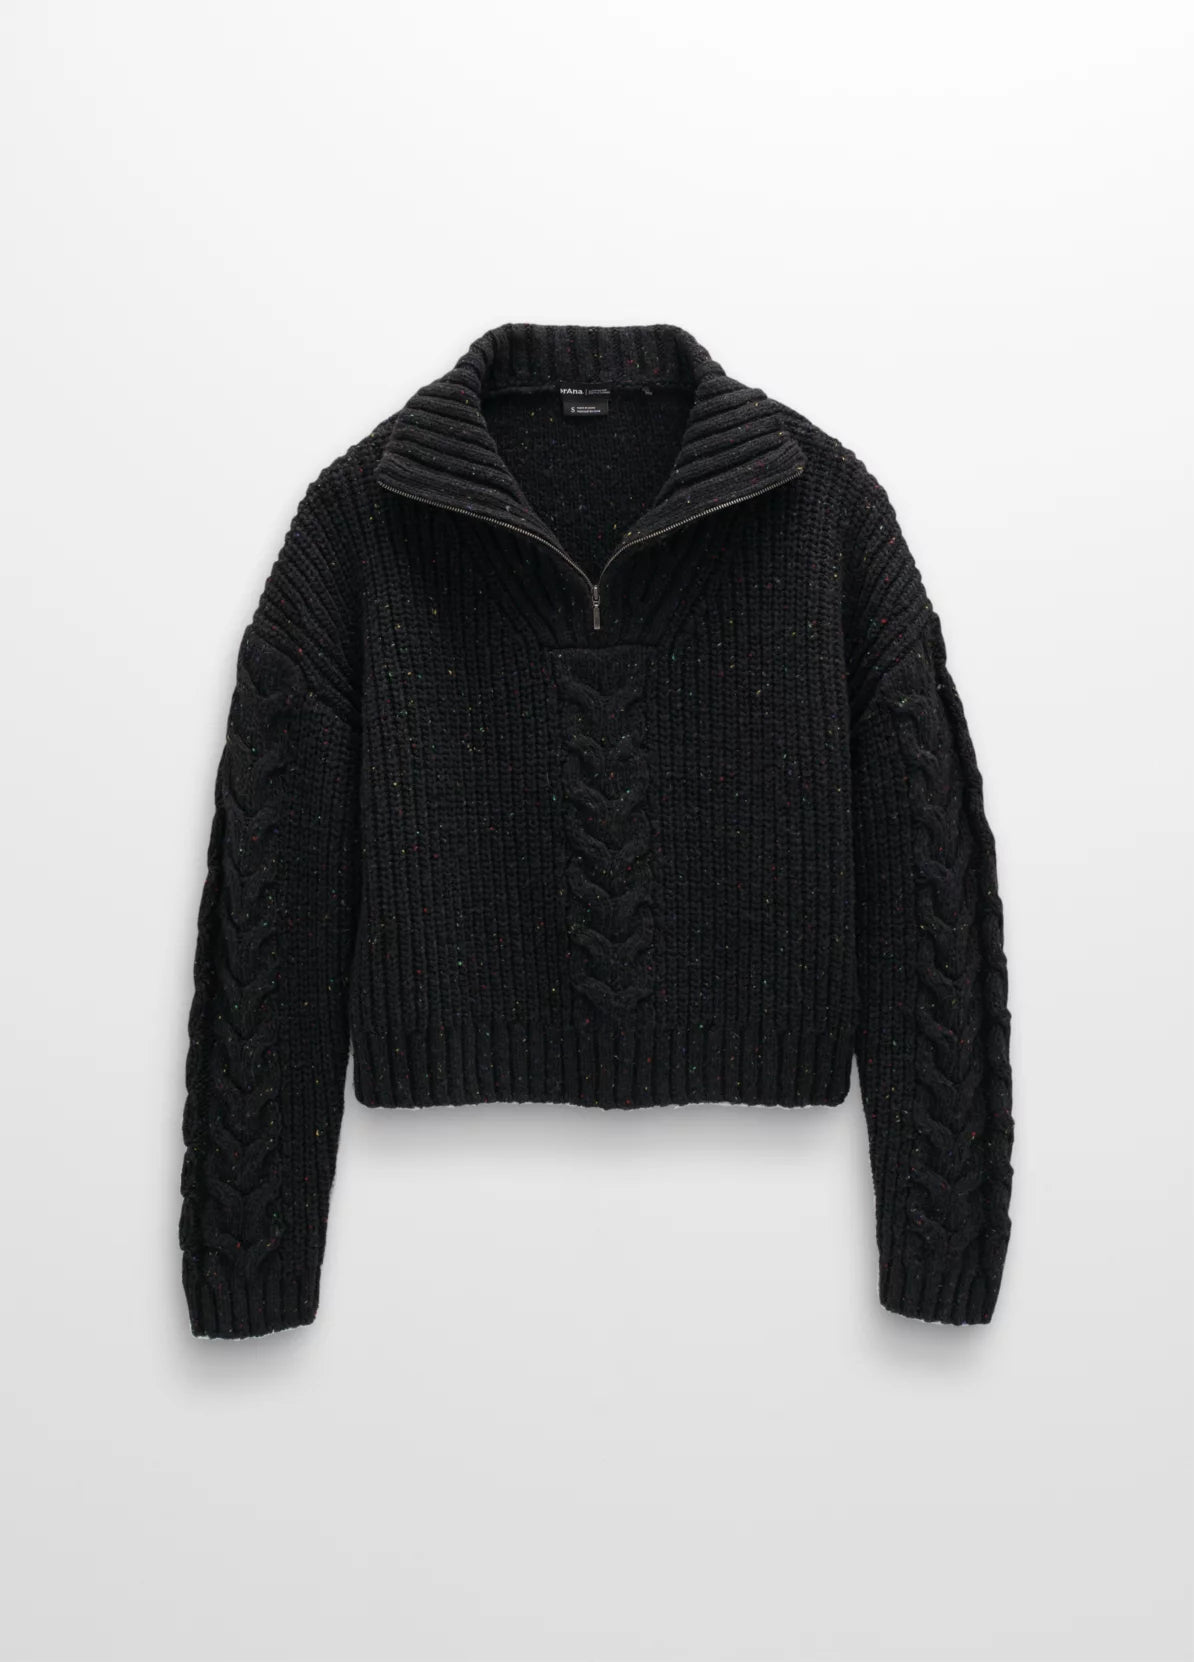 Laurel Creek Sweater